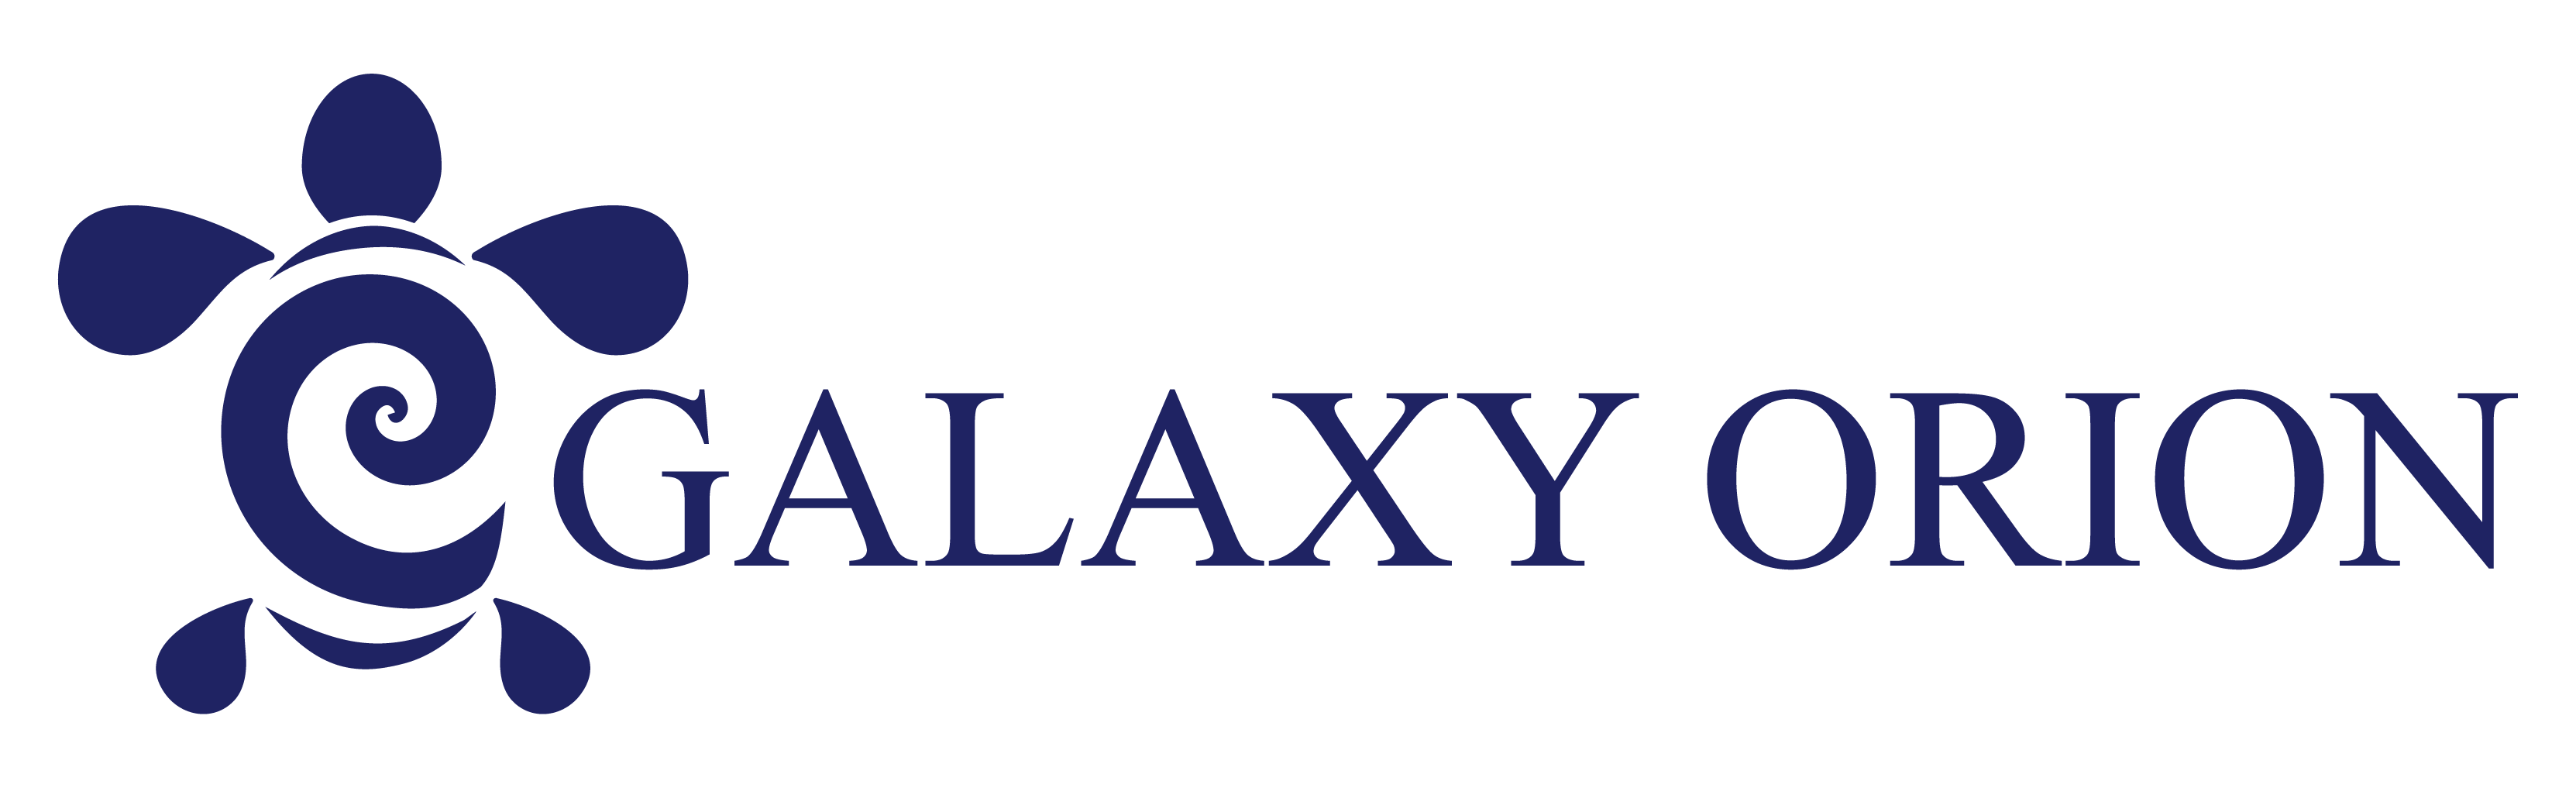 Logo Galaxy Diver